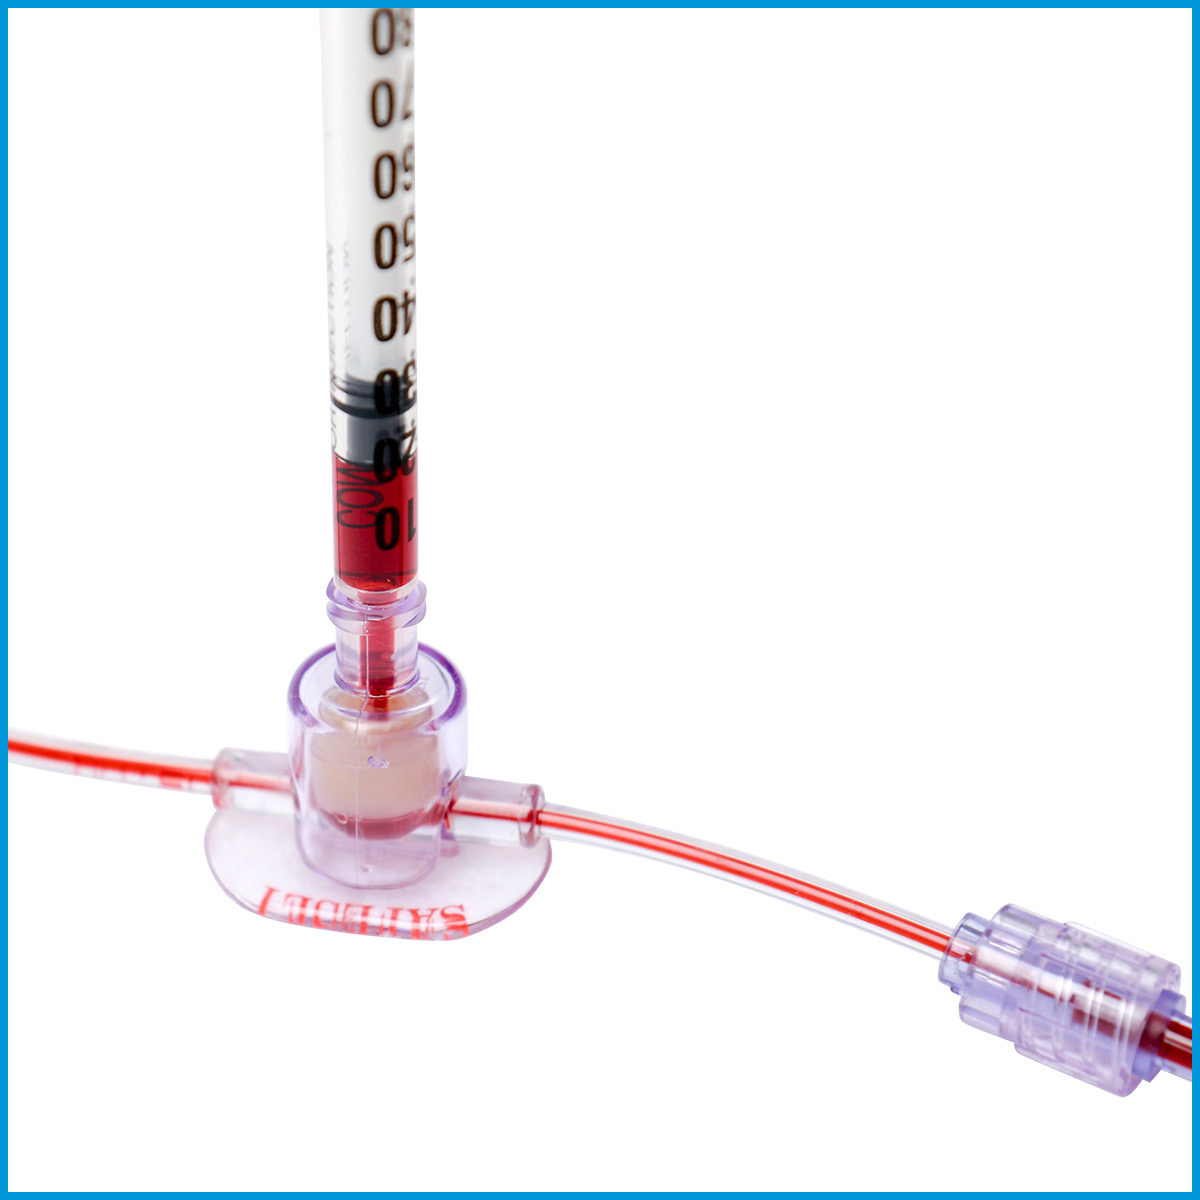 ICU Medicals Nicu Safeset with blood sample